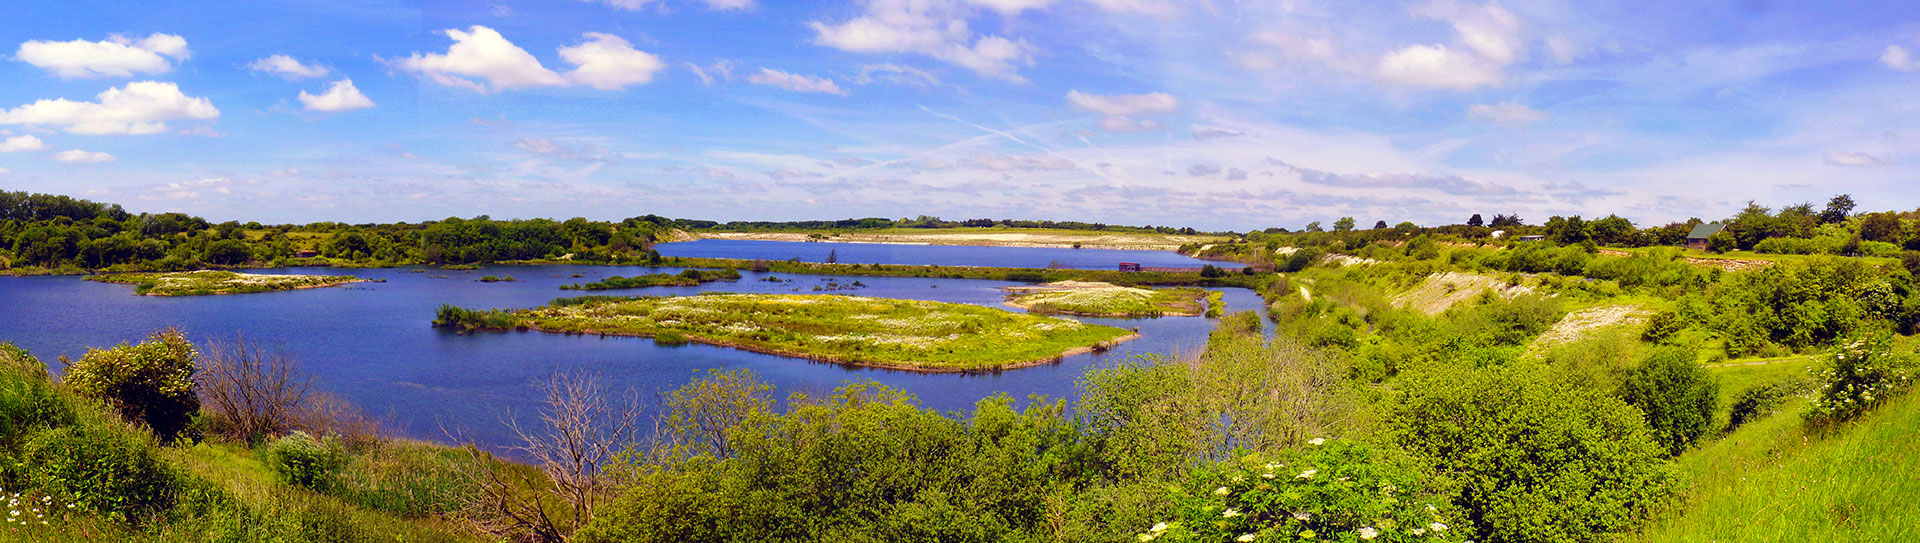 Panorama of College Lake Nature Reserve